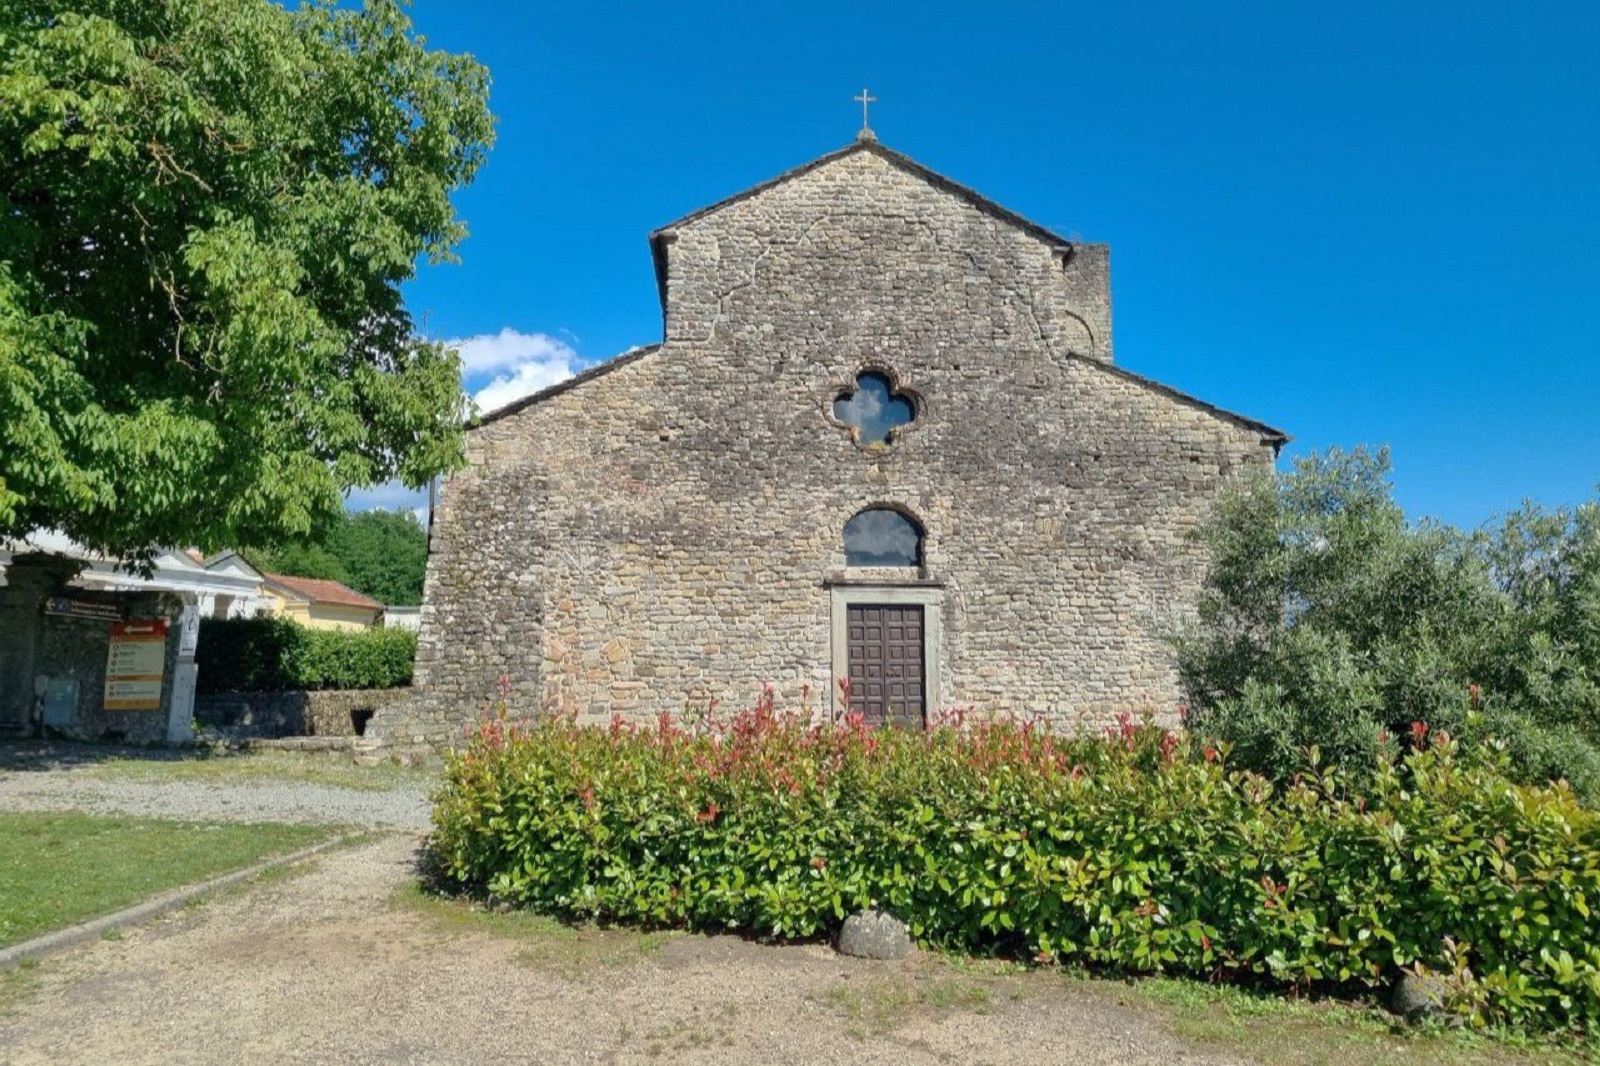 Parish Church of Sorano: Gate of the Parish churches